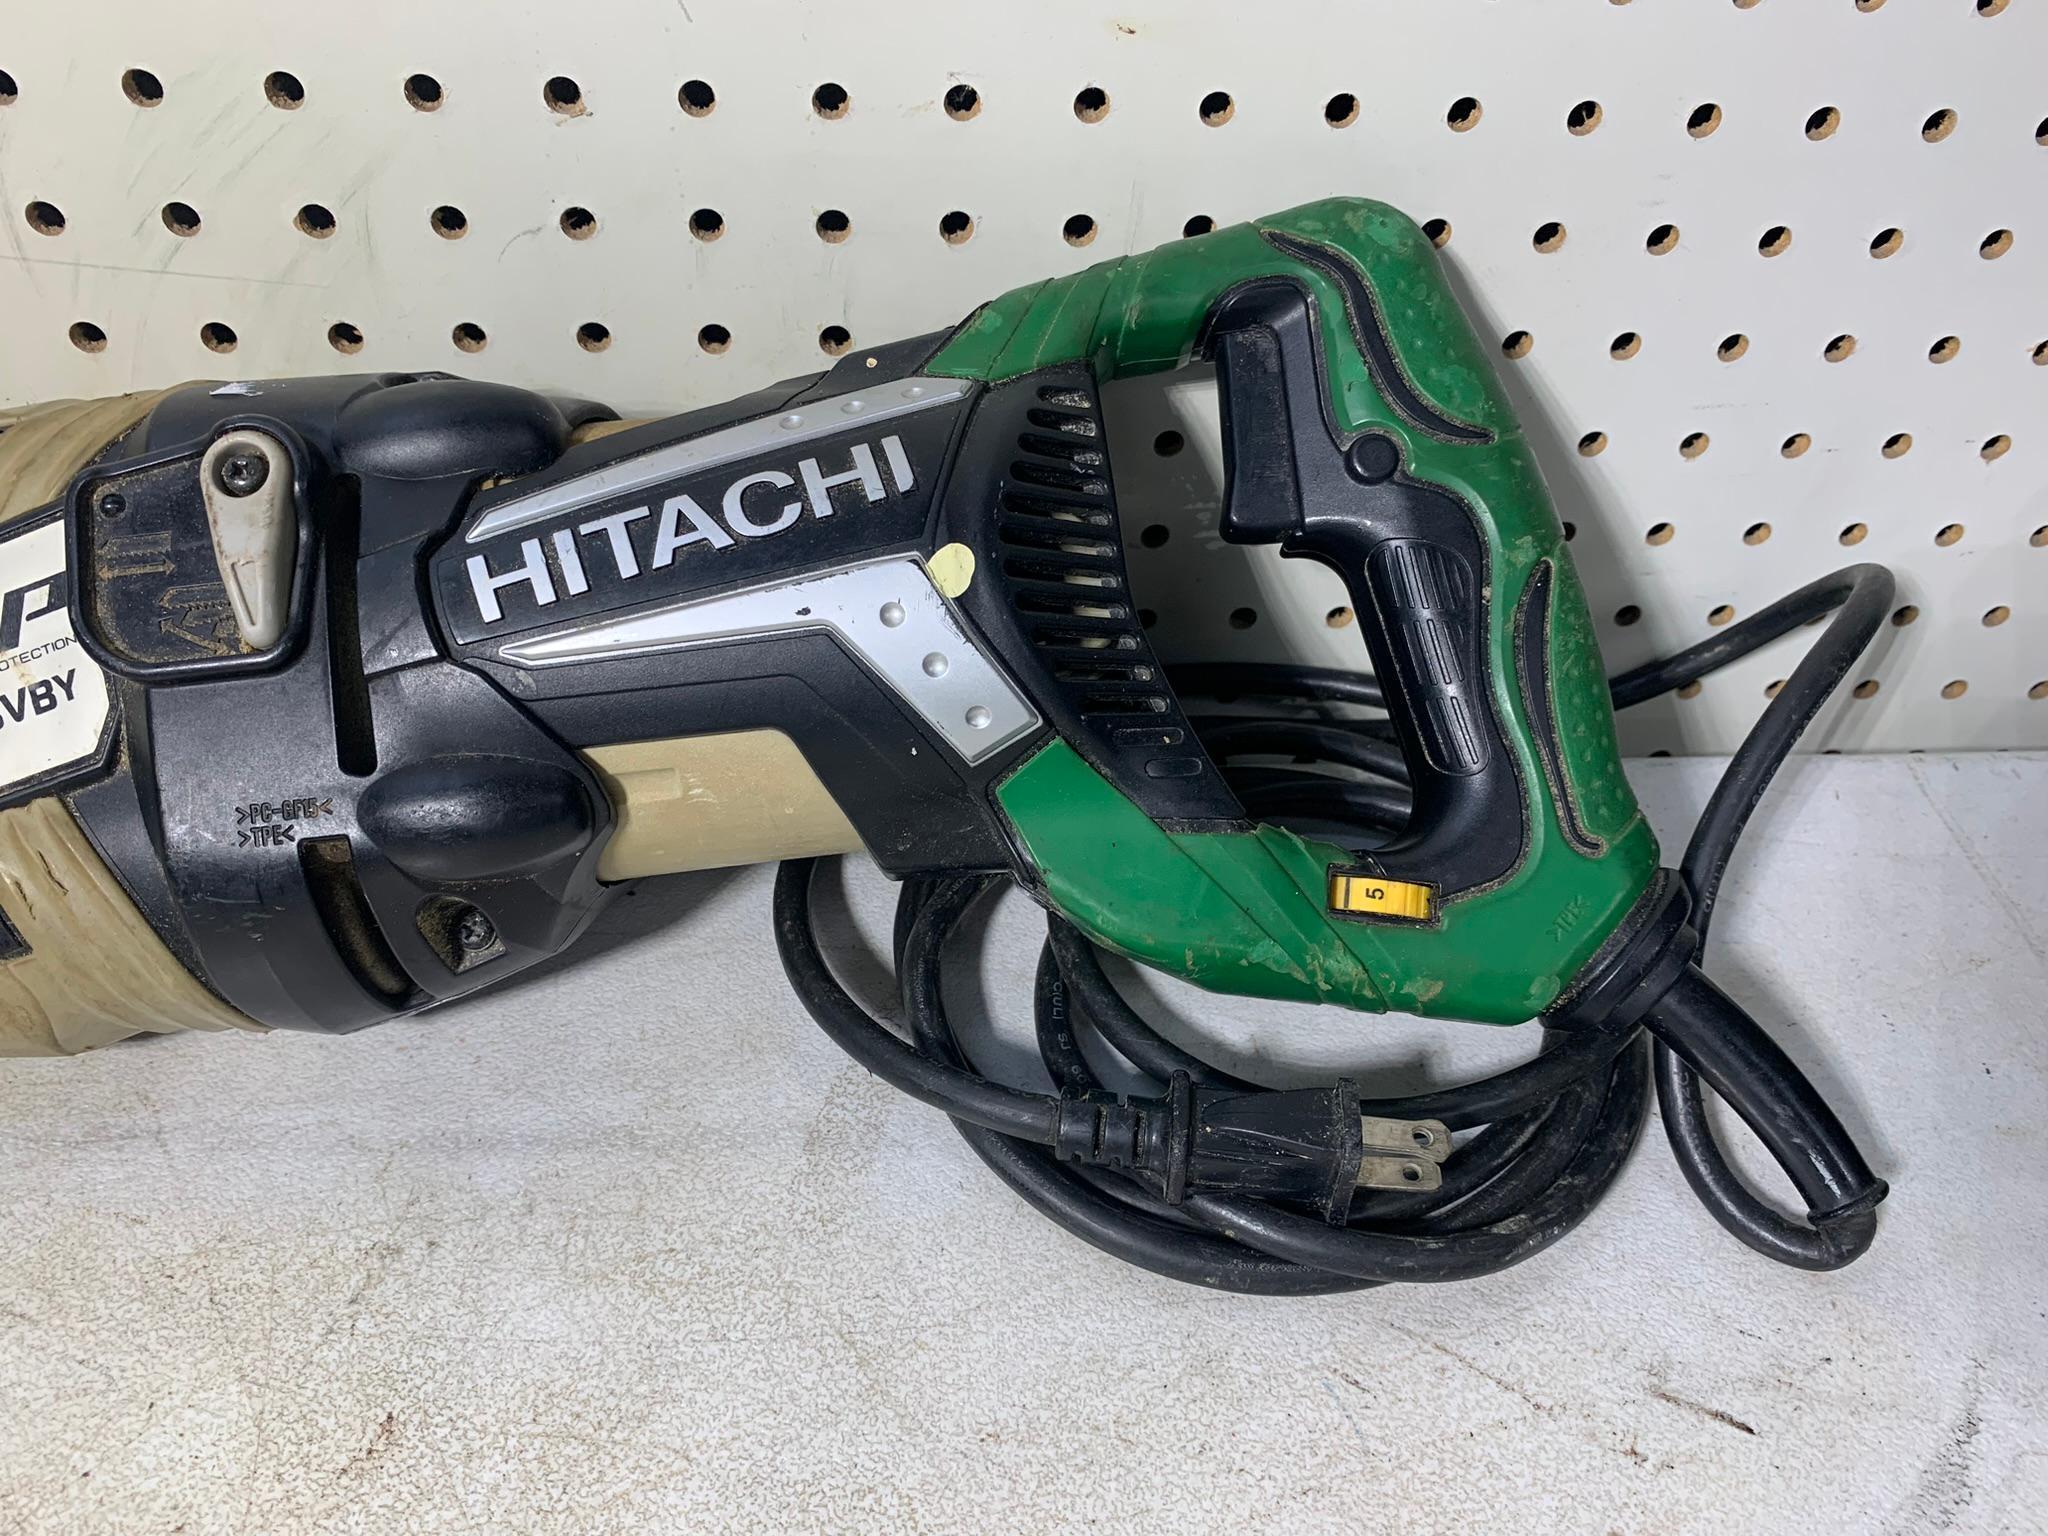 Hitachi Reciprocating Saw